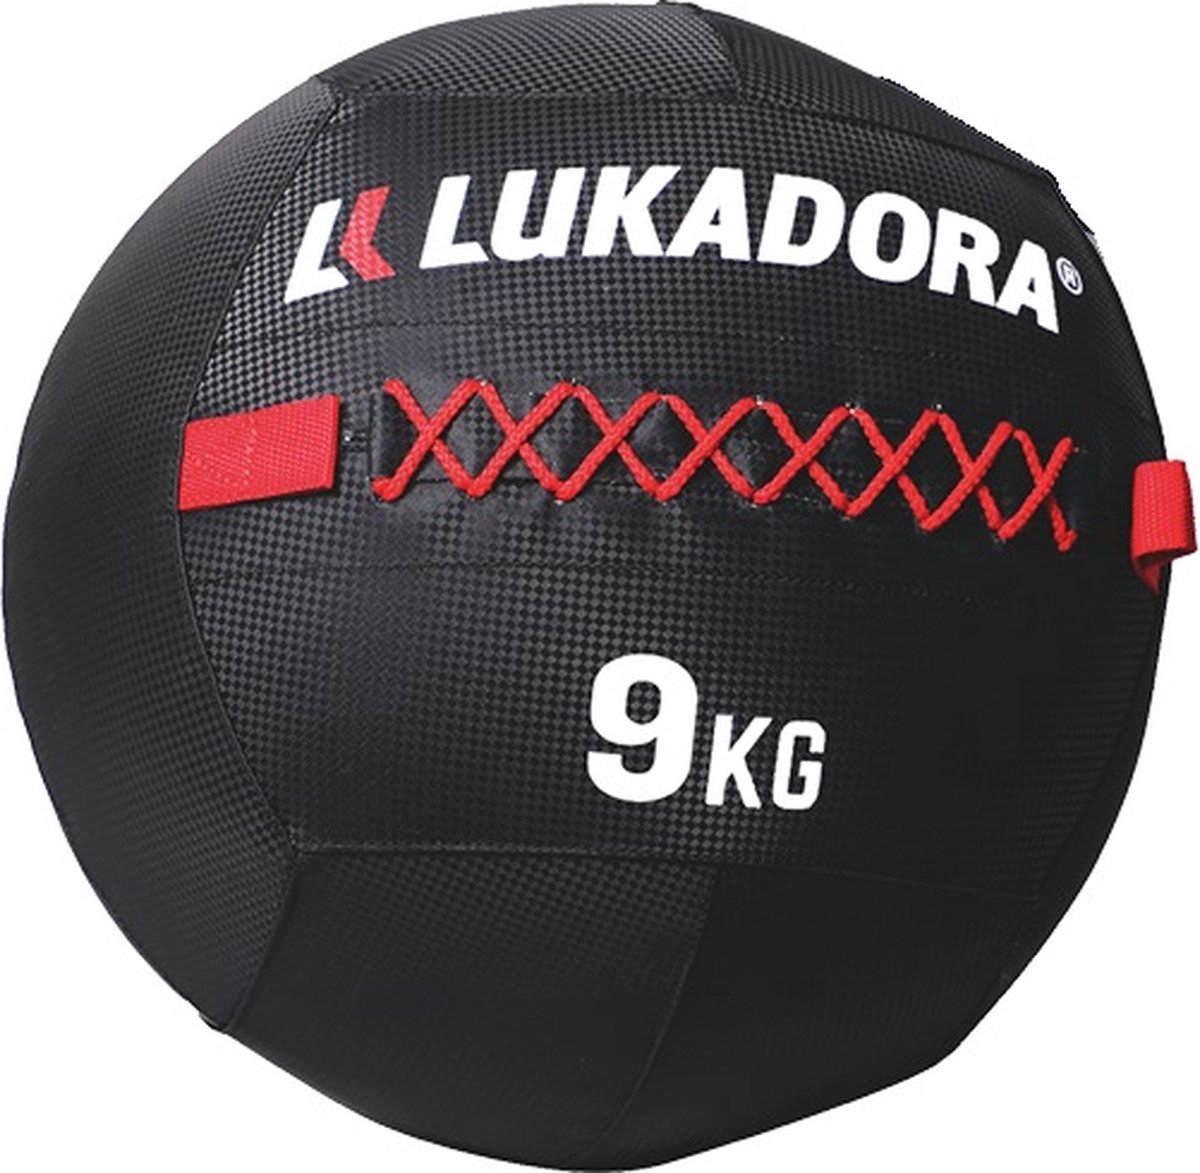 Lukadora Weight Wall Ball 9 kg - Train thuis met uitdagende HIT-circuits